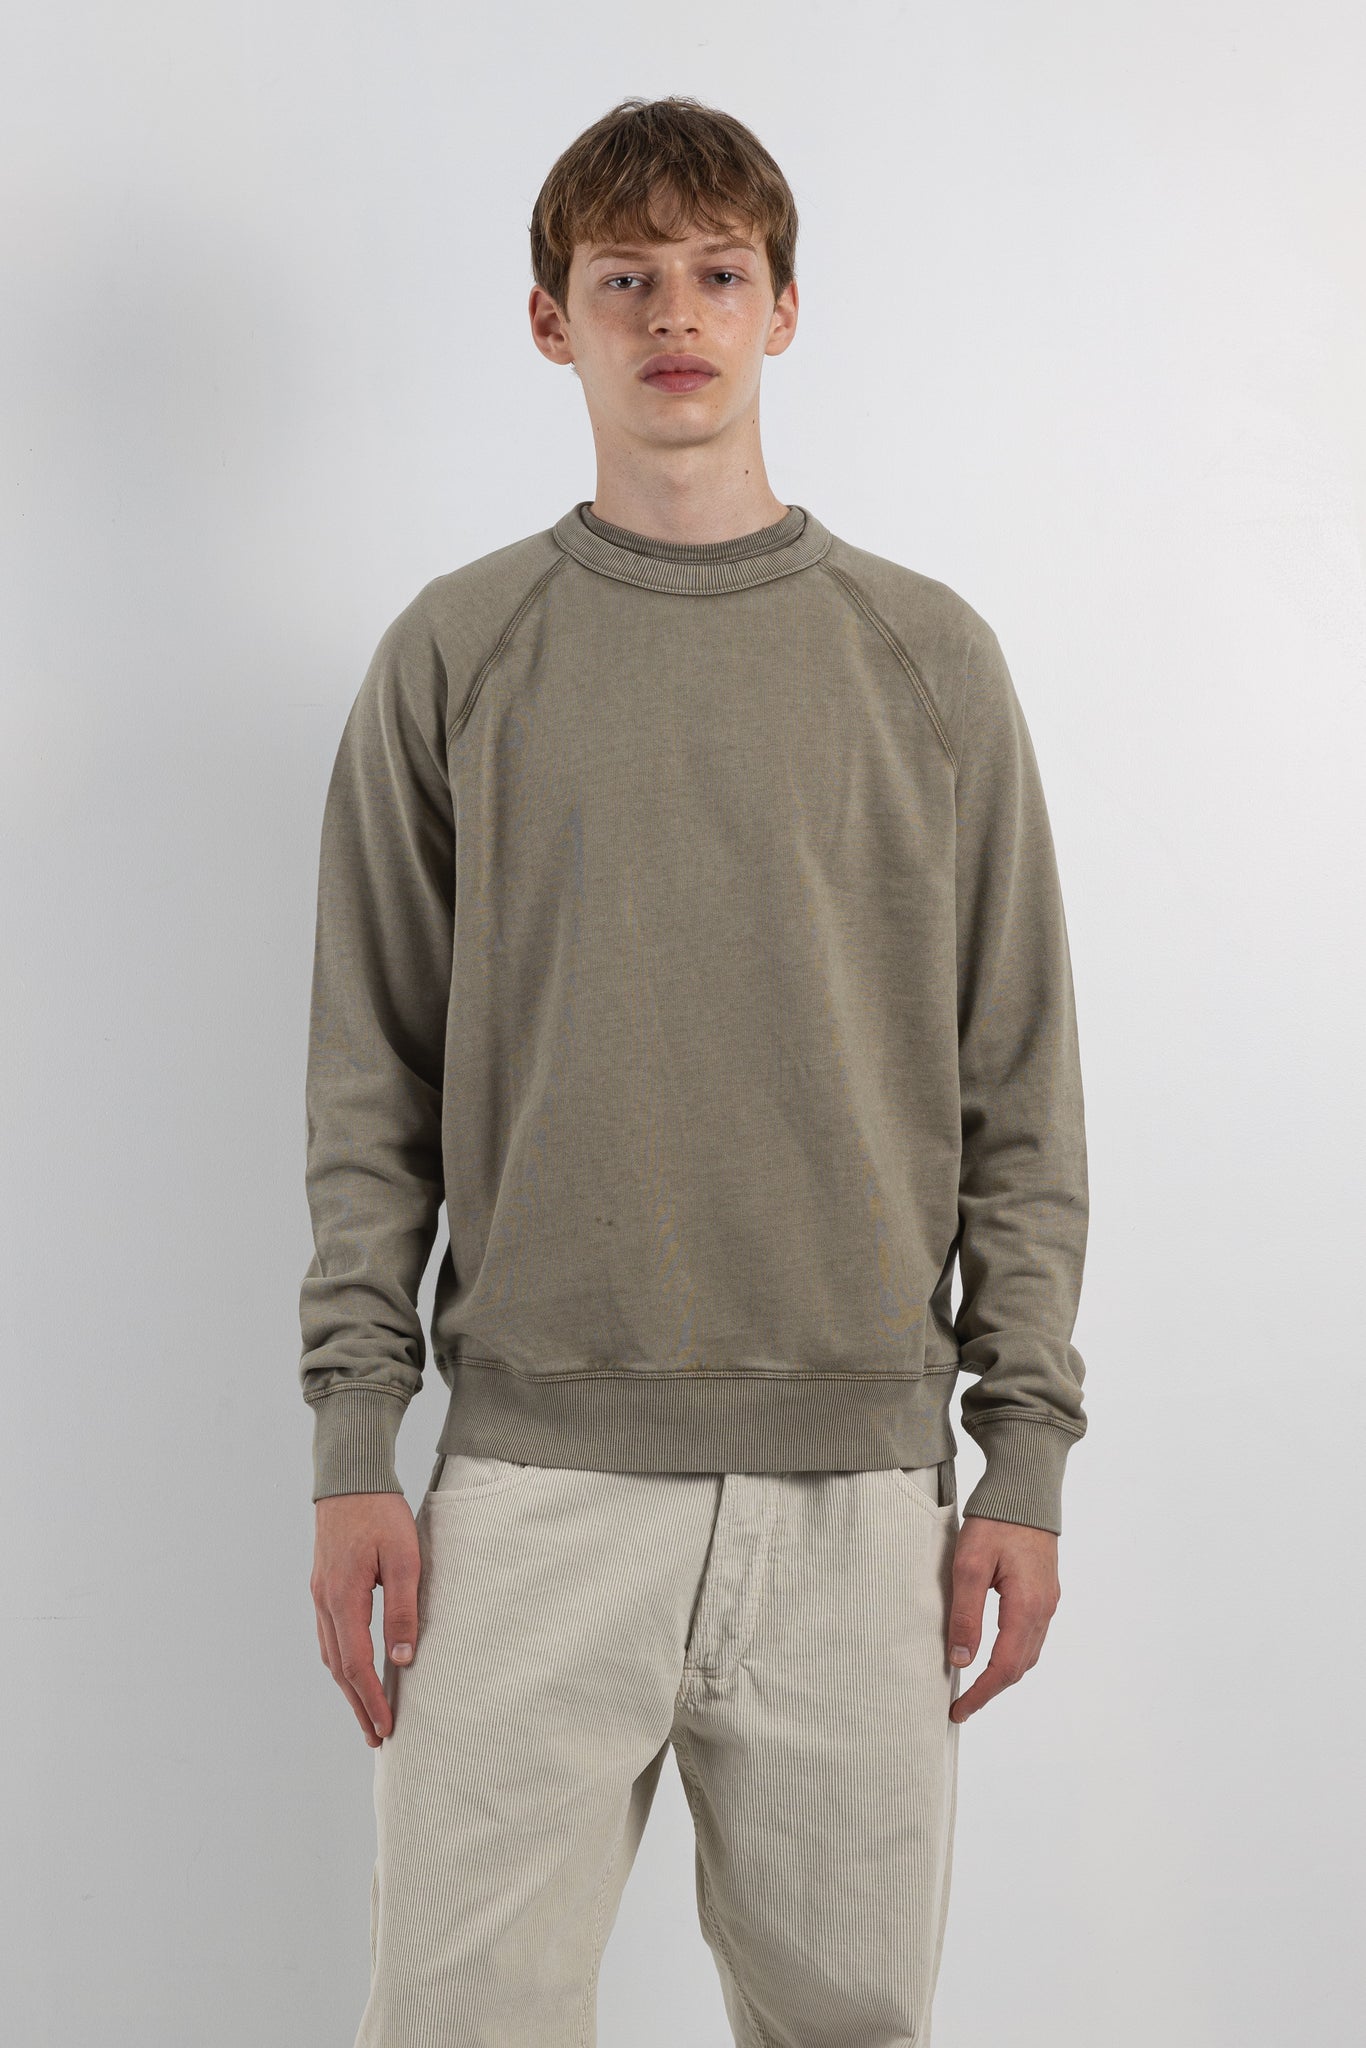 mens sweatshirt | YMC schrank sweatshirt | The Standard Storemens sweatshirt | YMC schrank sweatshirt | The Standard Store